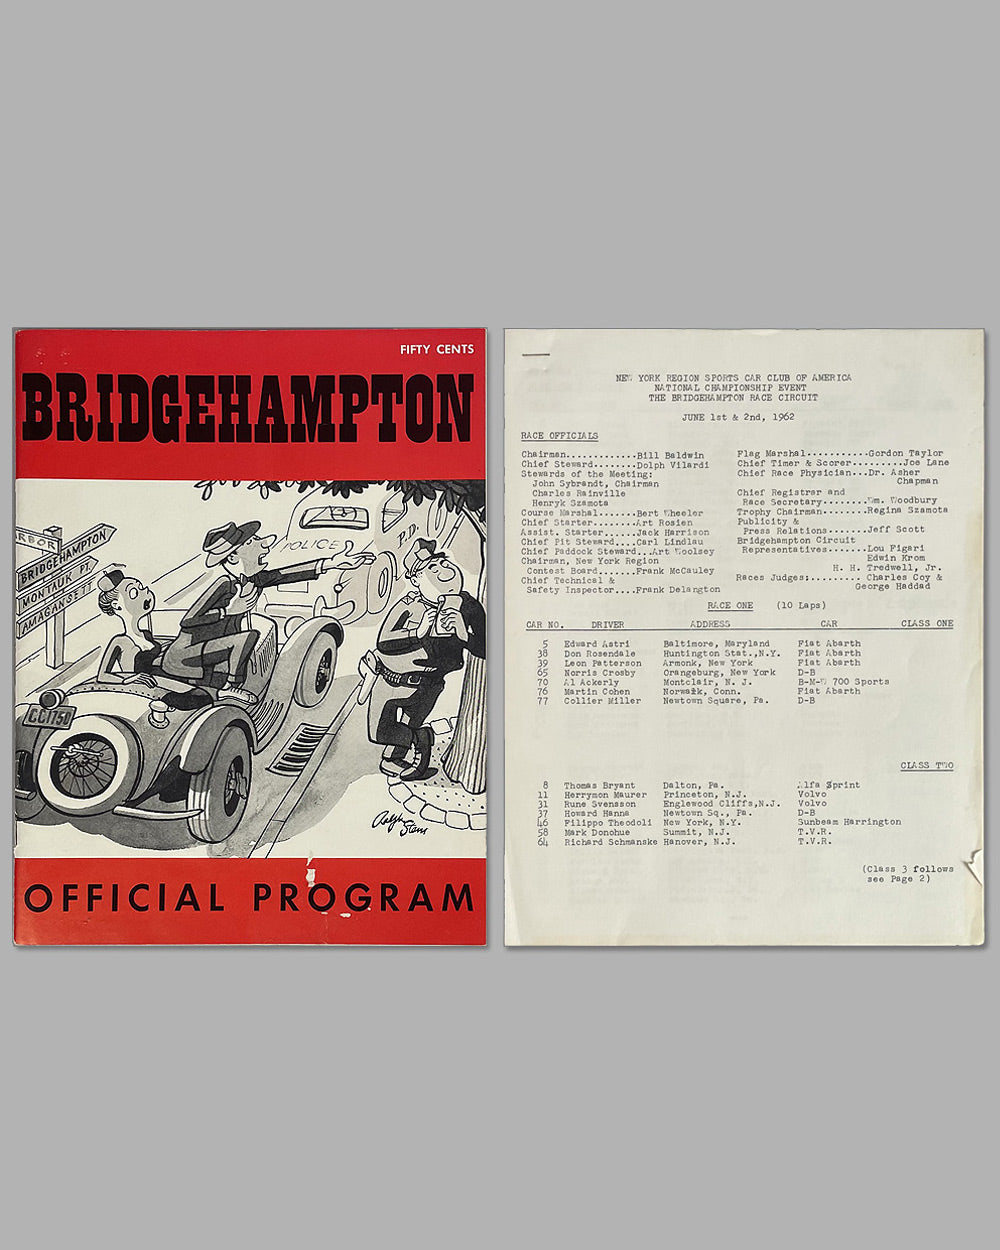 Bridgehampton race program and entry list for the SCCA National Championship, 1962